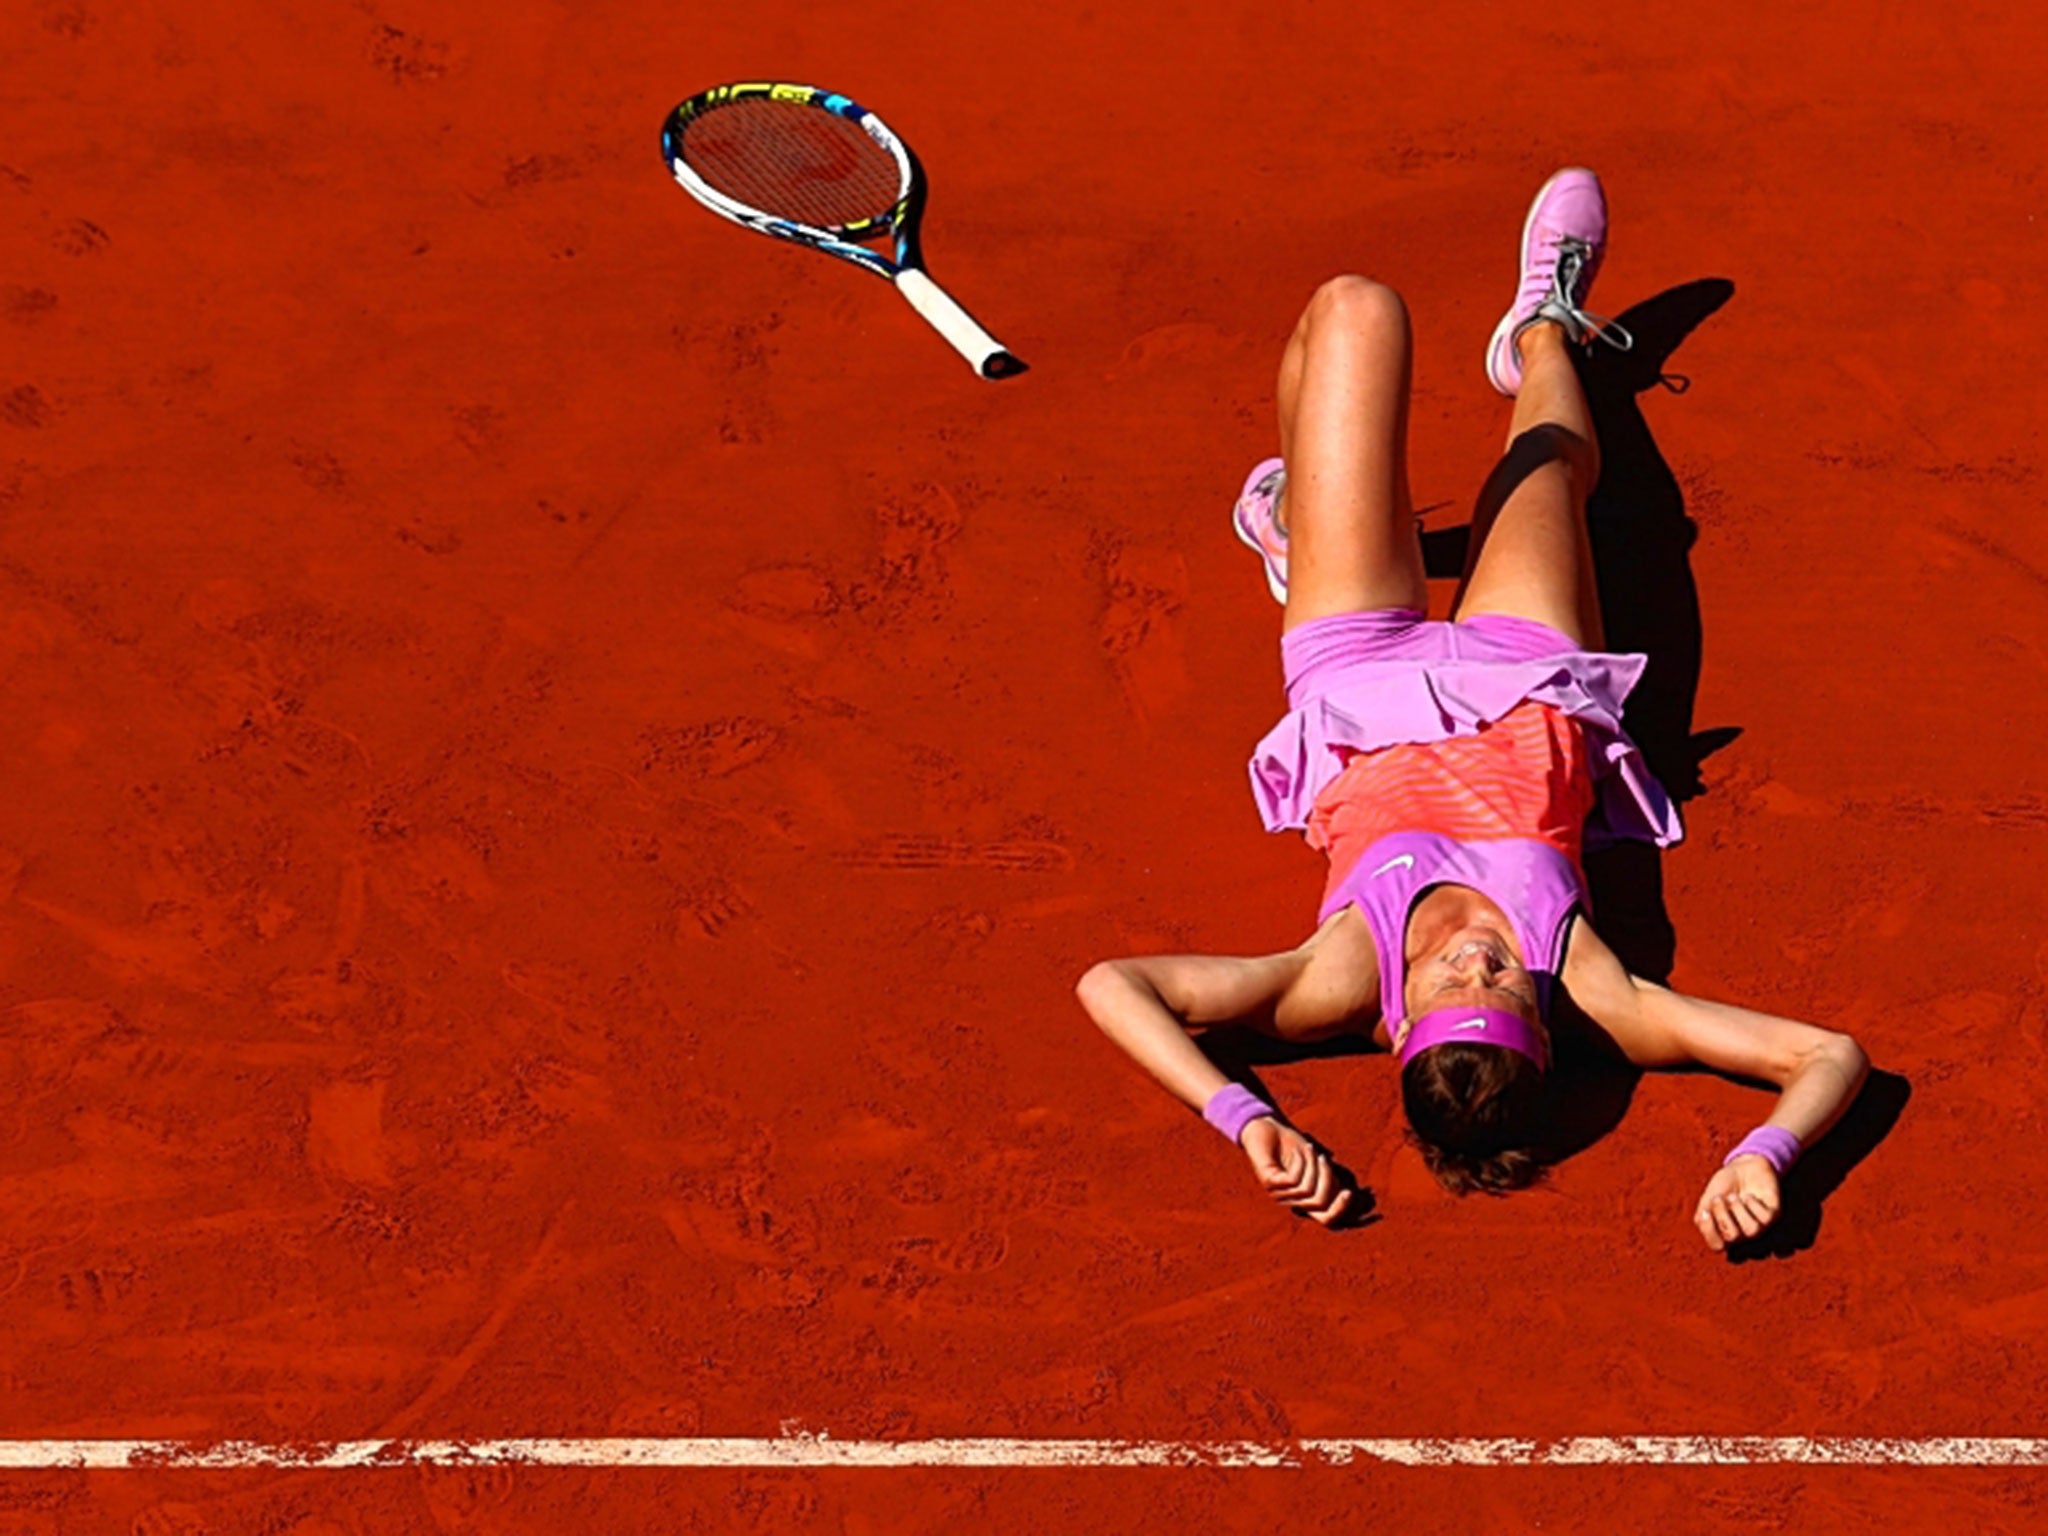 Lucie Safarova celebrates reaching her first Grand Slam final on Thursday